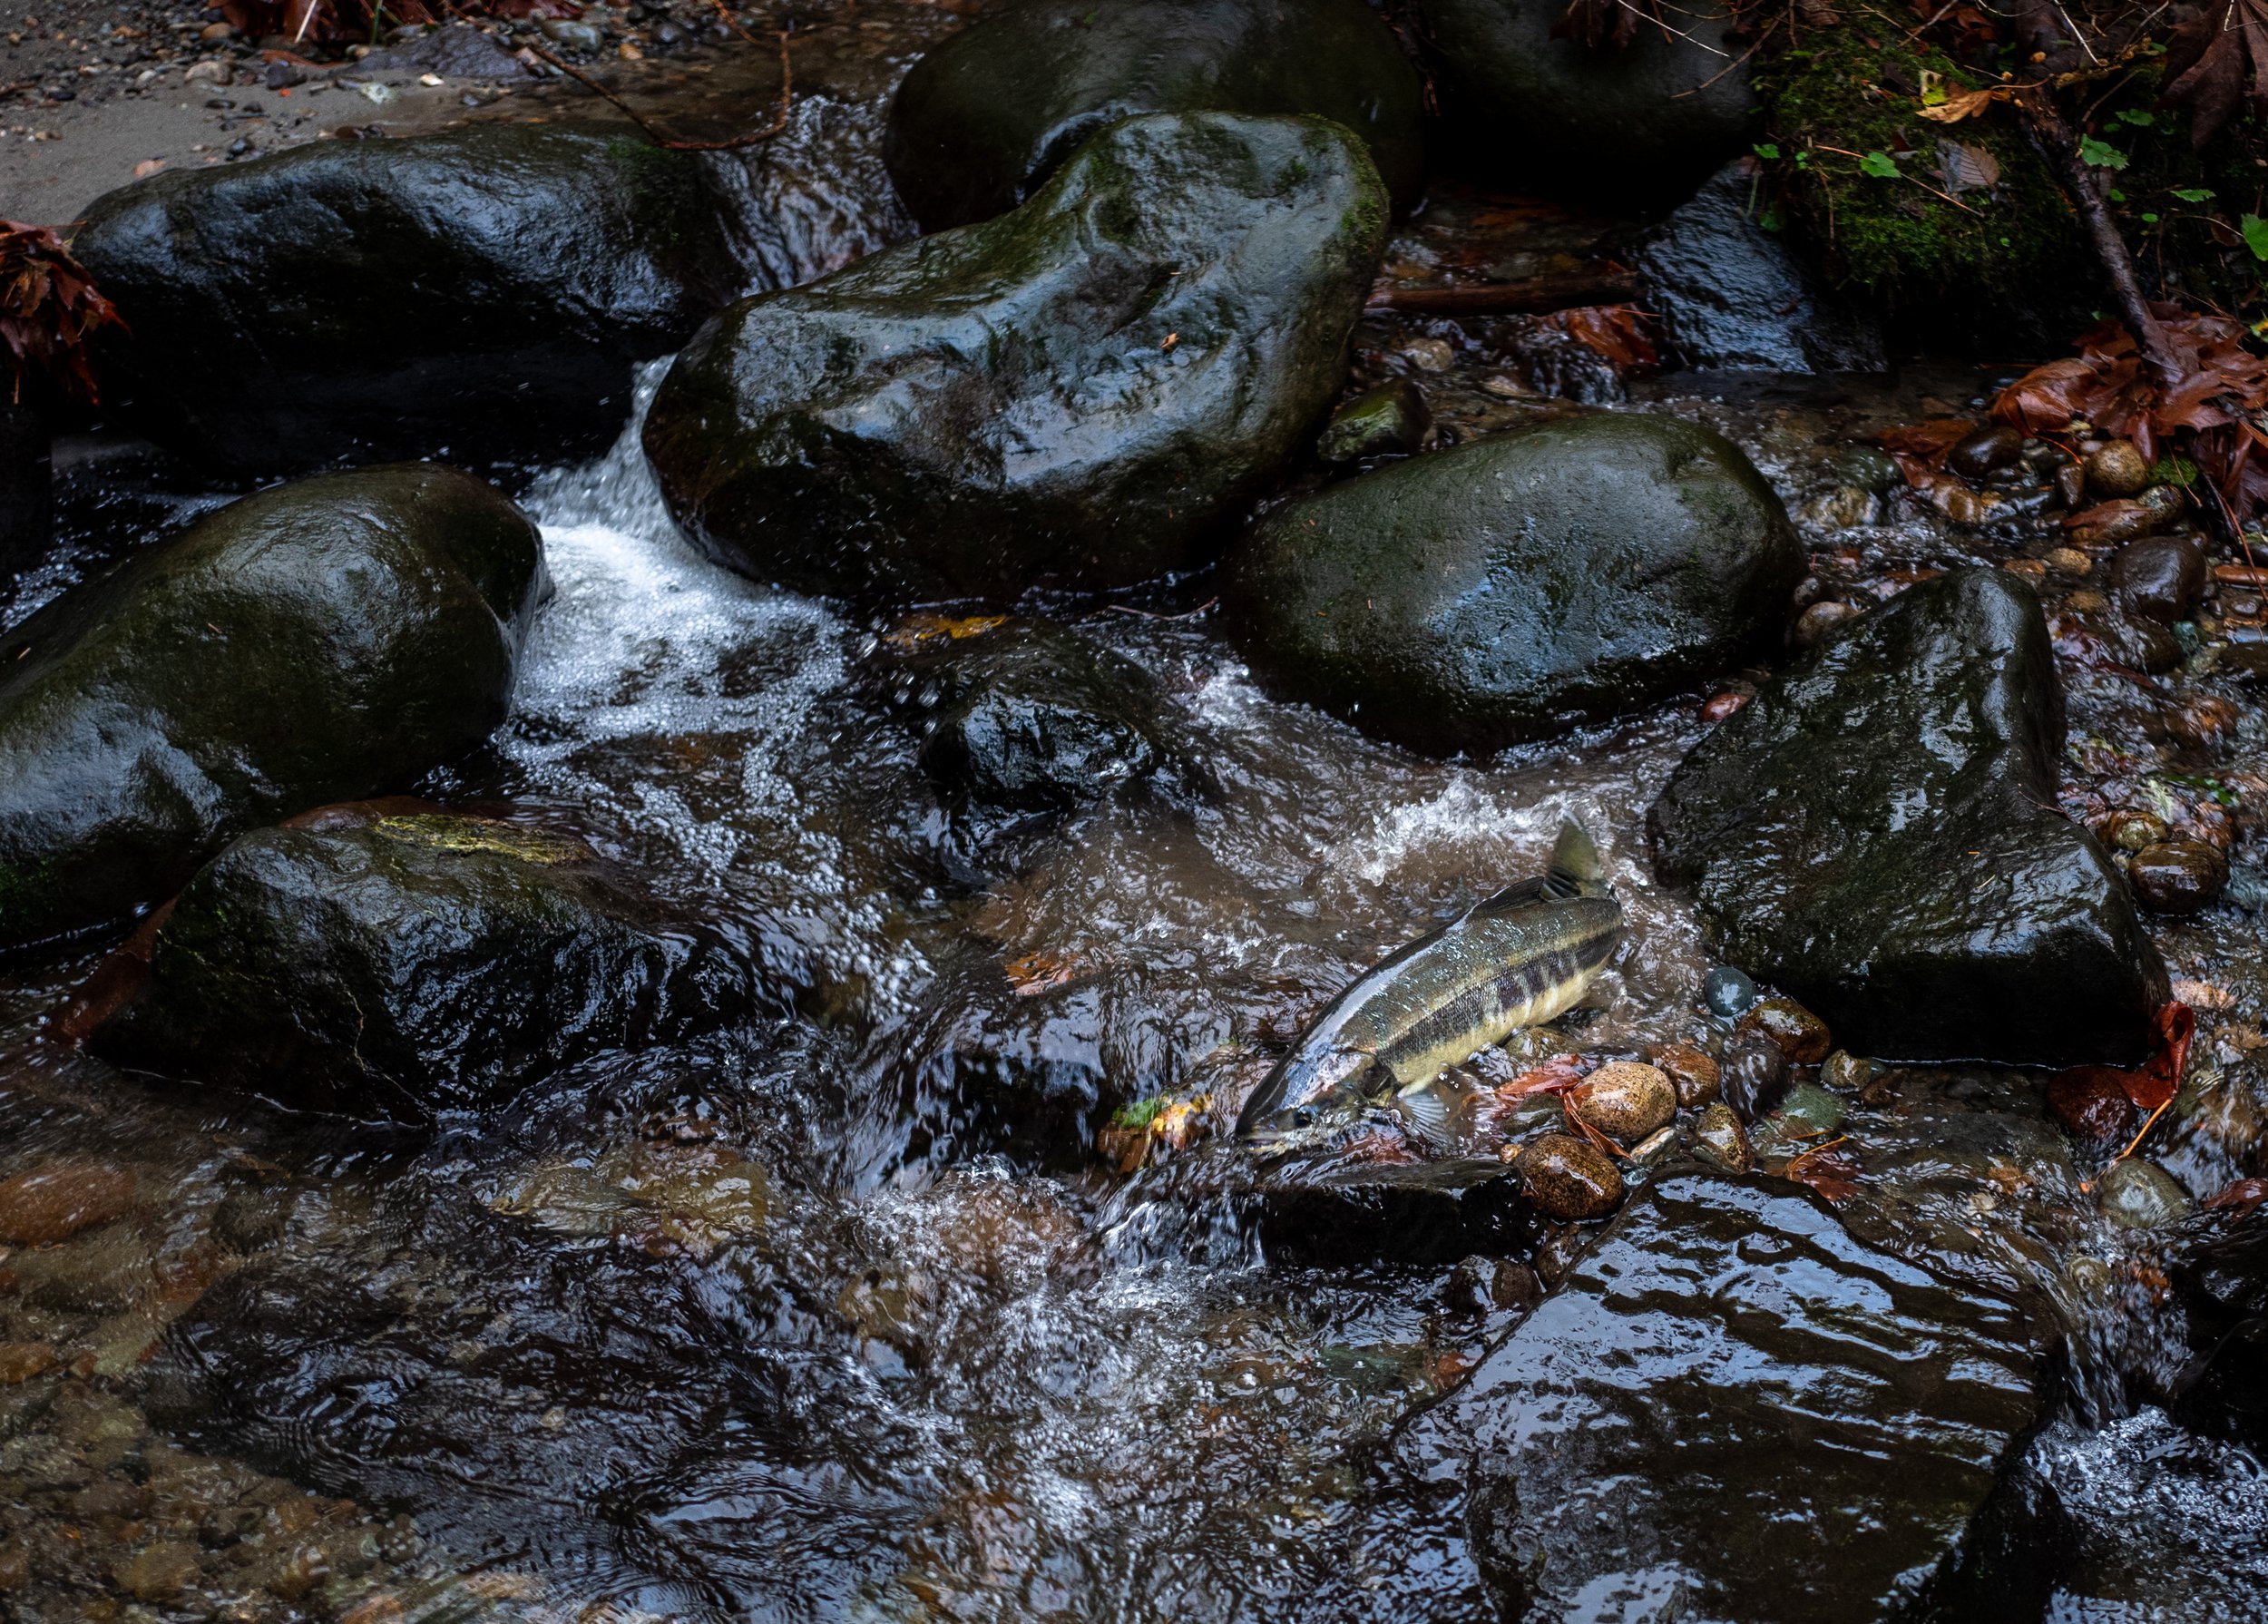  A coho salmon swimming upstream 